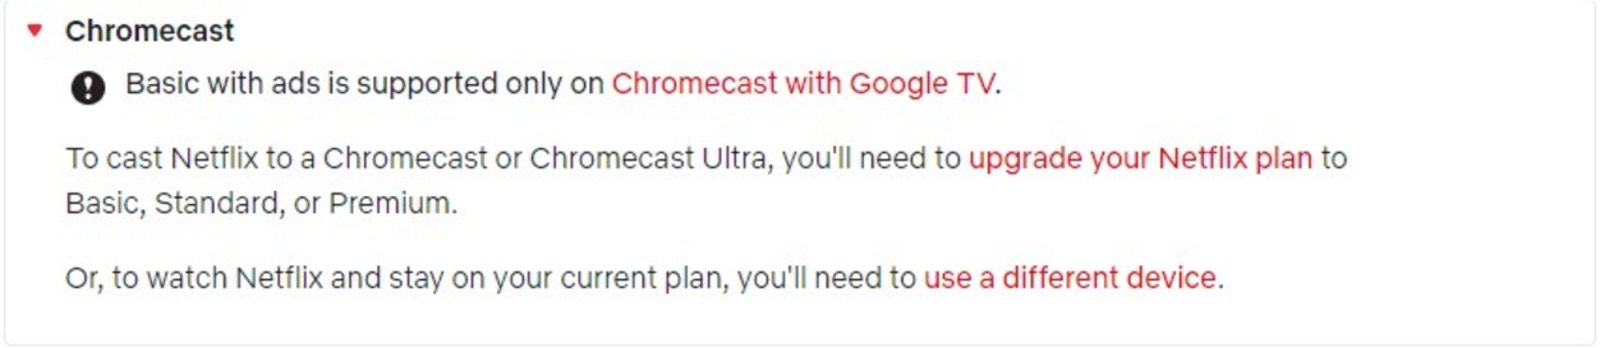 Netflix anuncios Chromecast